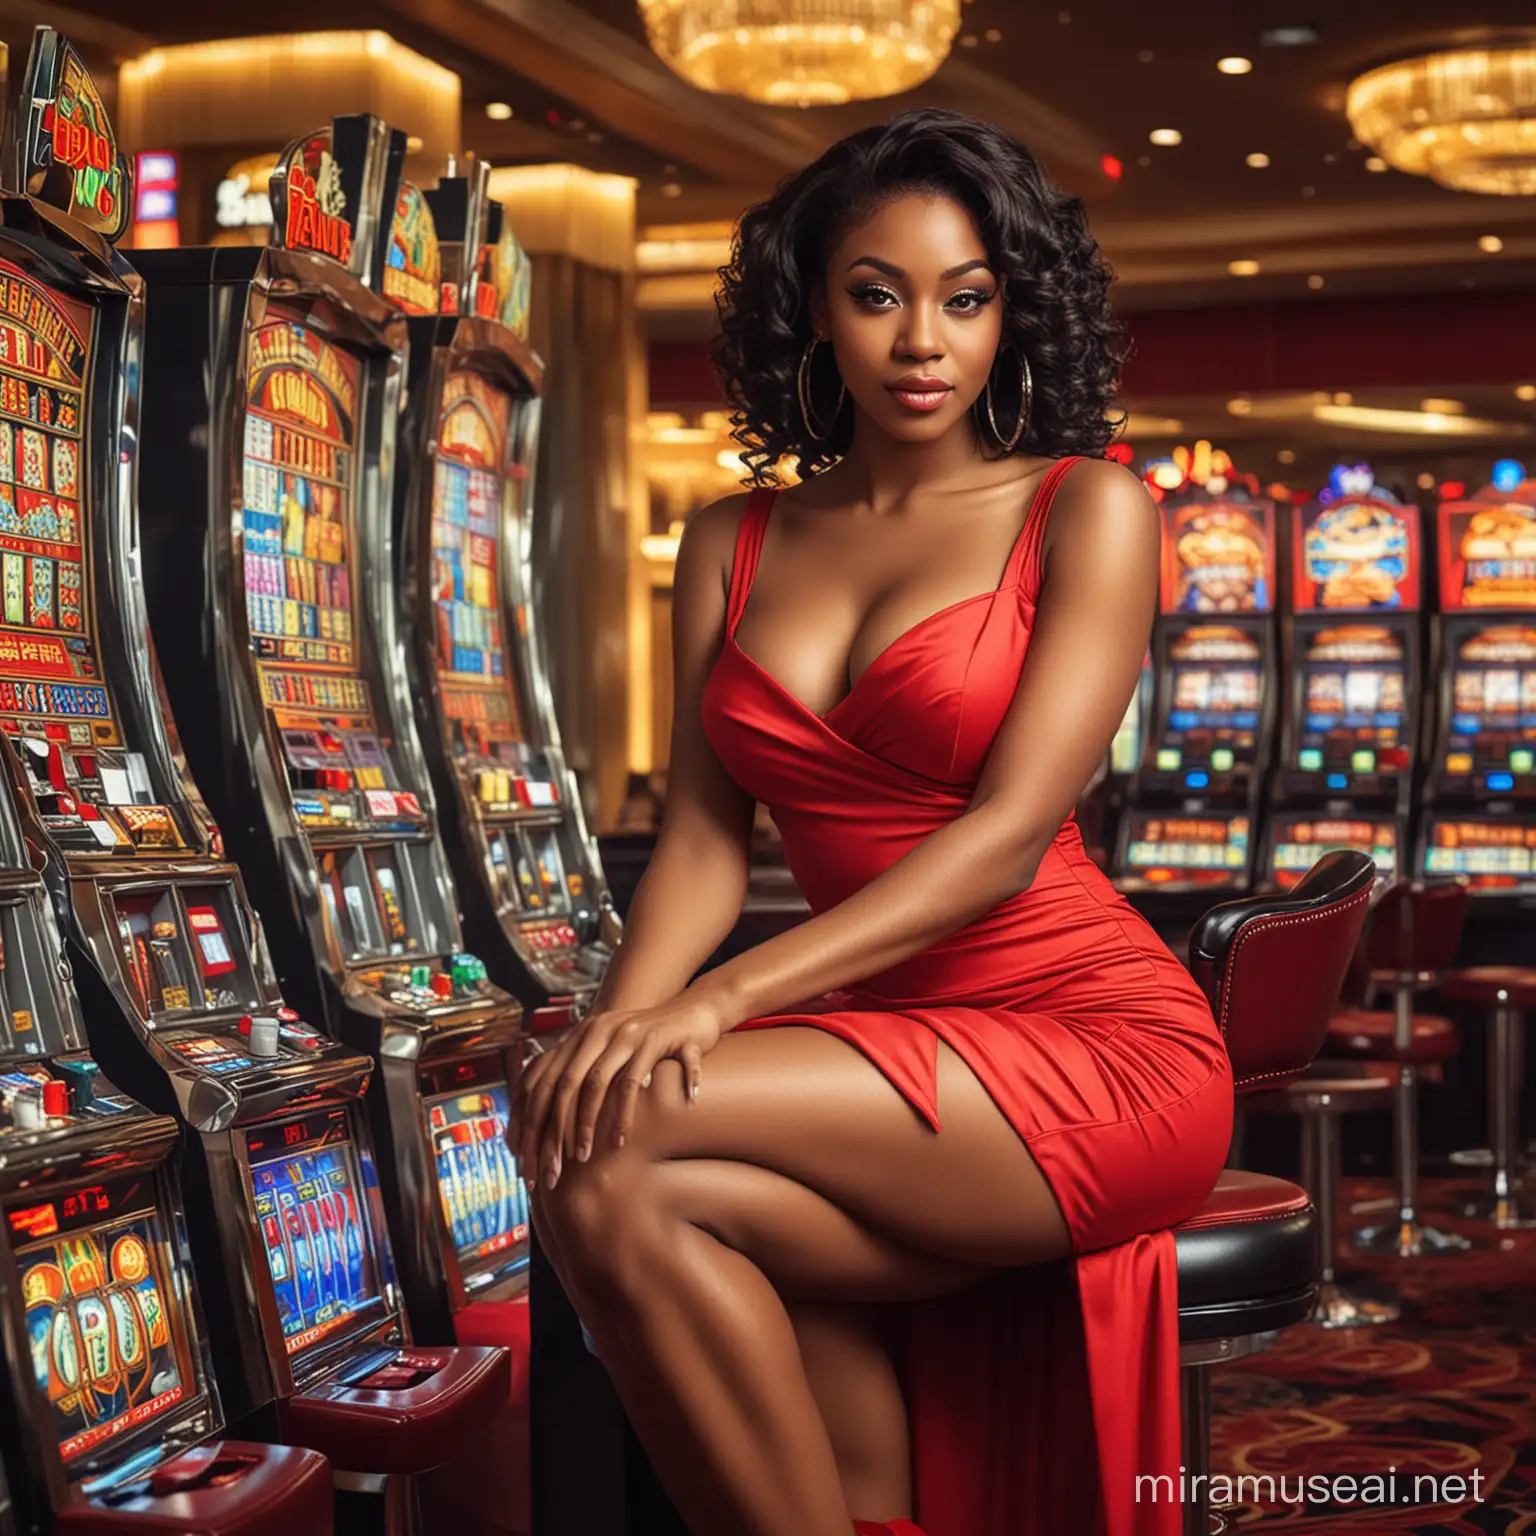 Stylish Woman Enjoying Casino Slots in Red Dress and High Heels